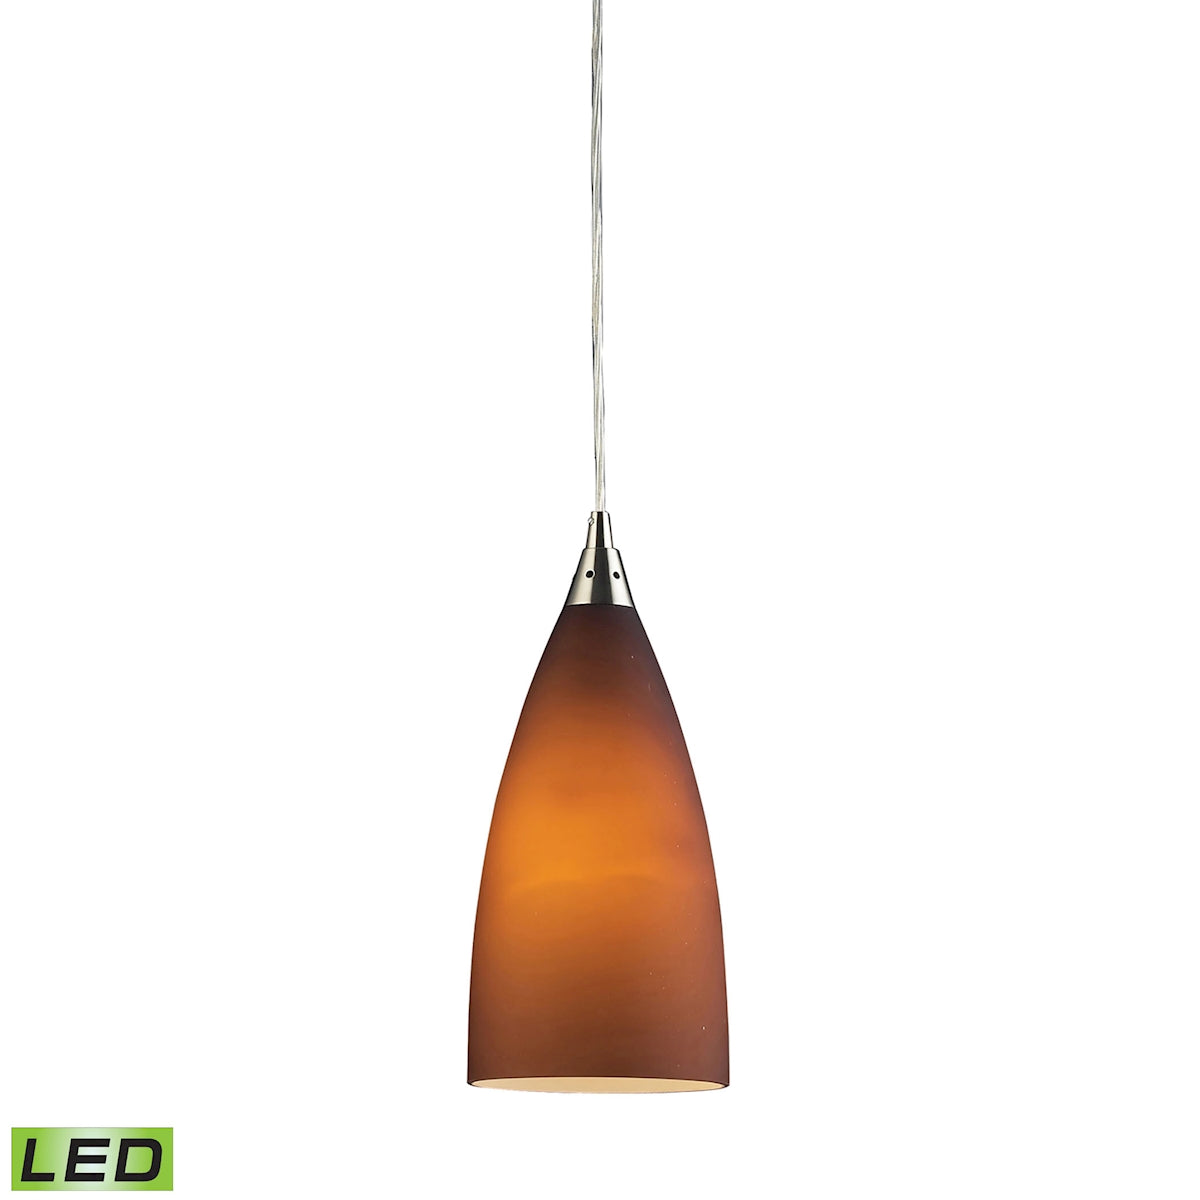 ELK Lighting 2582/1-LED Vesta 1-Light Mini Pendant in Satin Nickel with Tobacco Glass - Includes LED Bulb